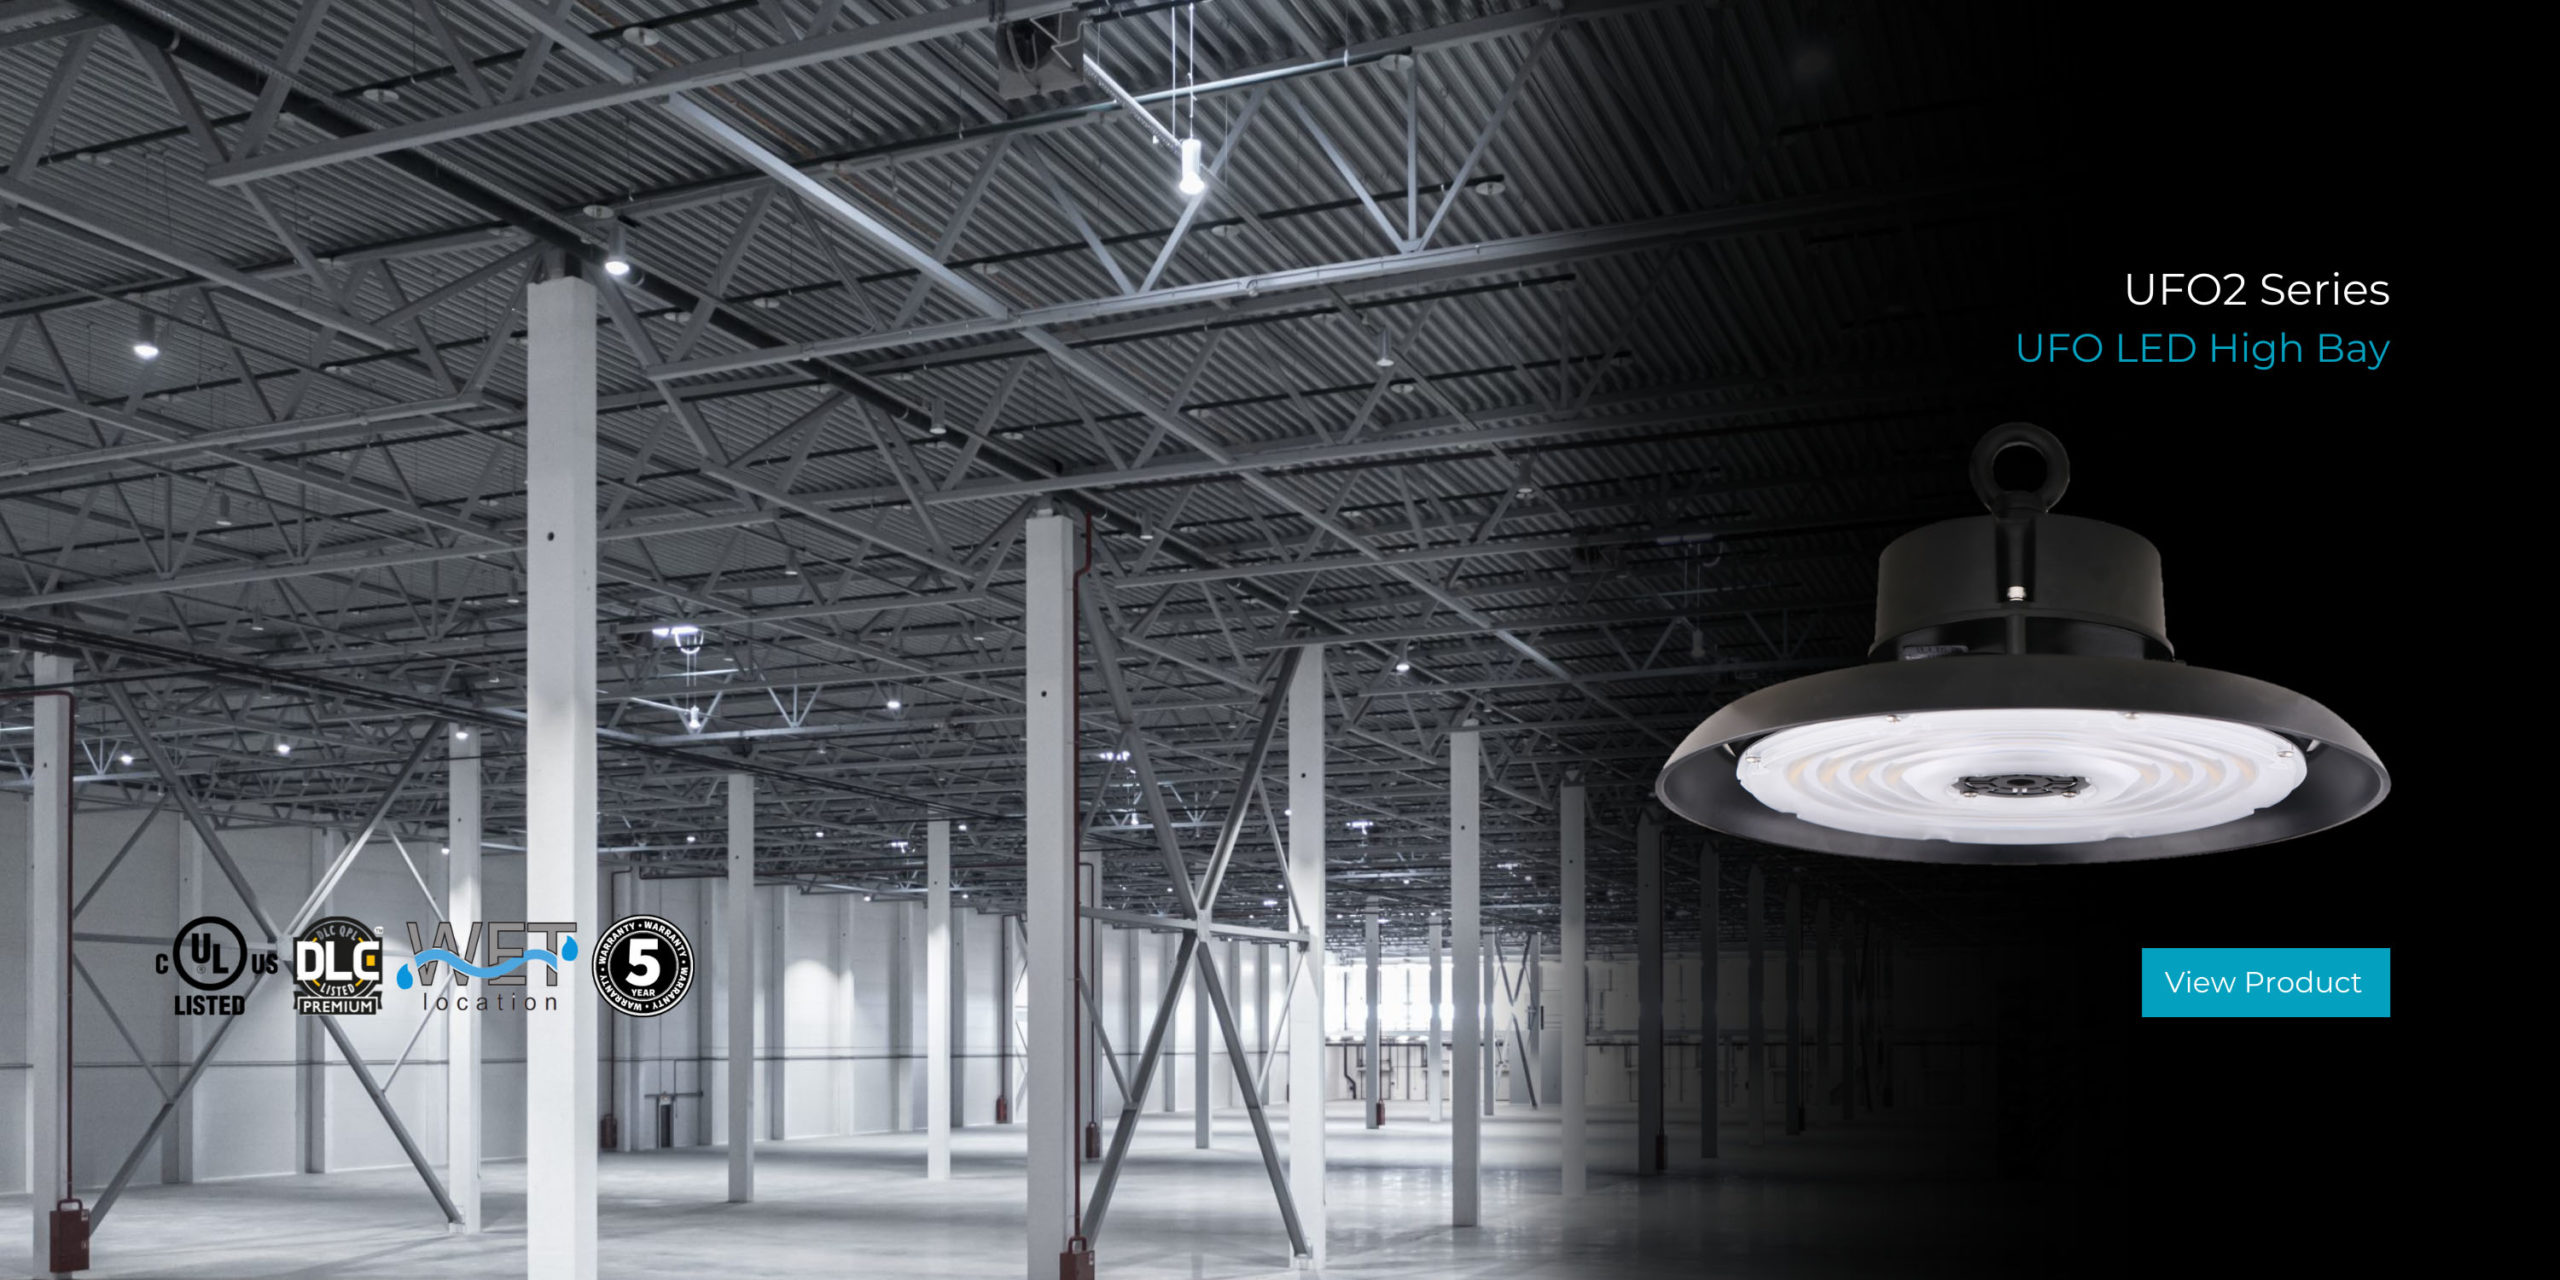 attribut kit Lover og forskrifter GlobaLux Lighting- Commercial, Industrial & Residential LED Lighting  Manufacturer